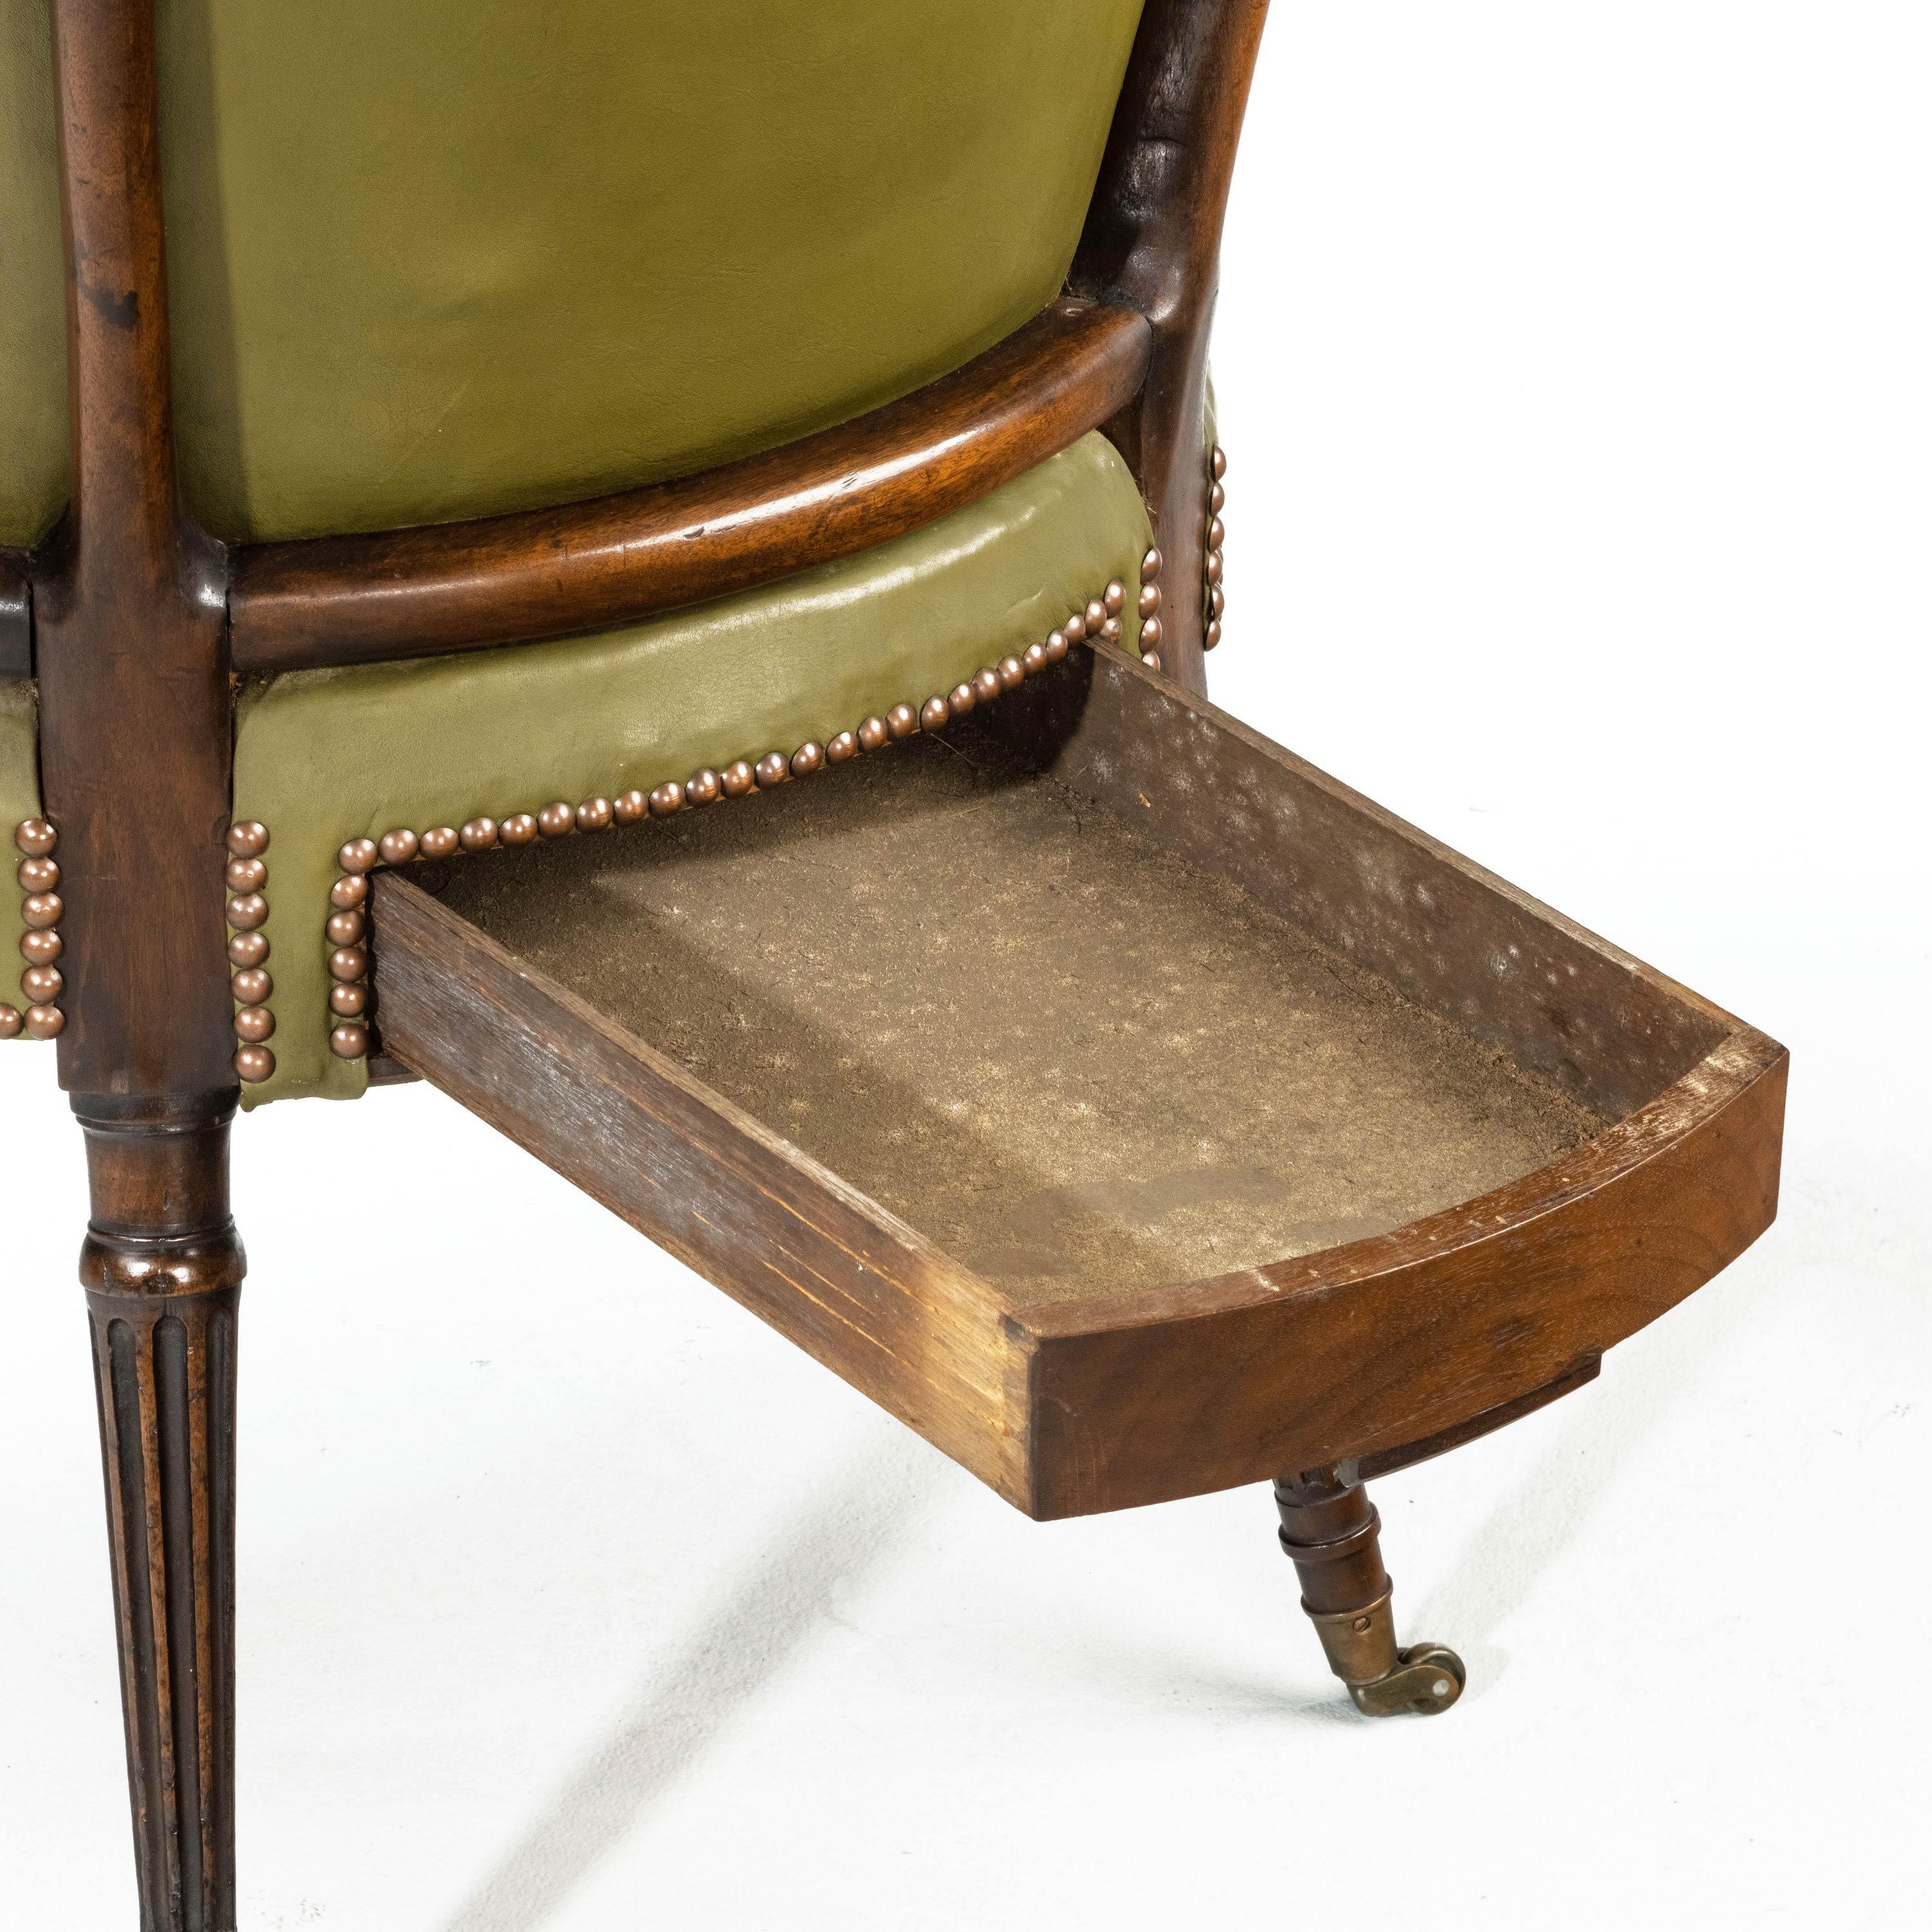 Very Good George III Period Mahogany Desk Chair (Mahagoni)